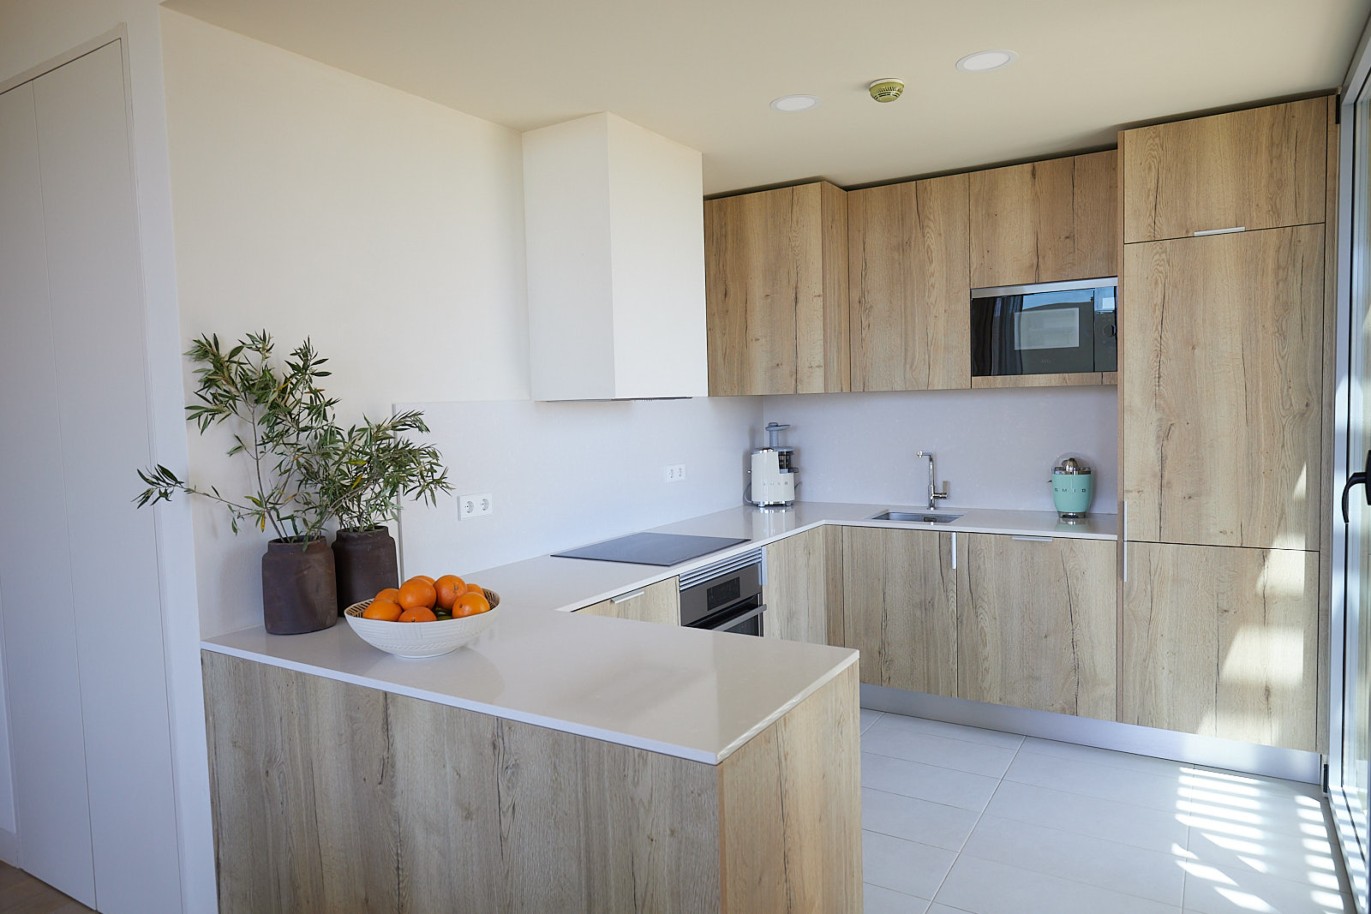 2 bedroom apartment in resort, for sale in Porches, Algarve_228789